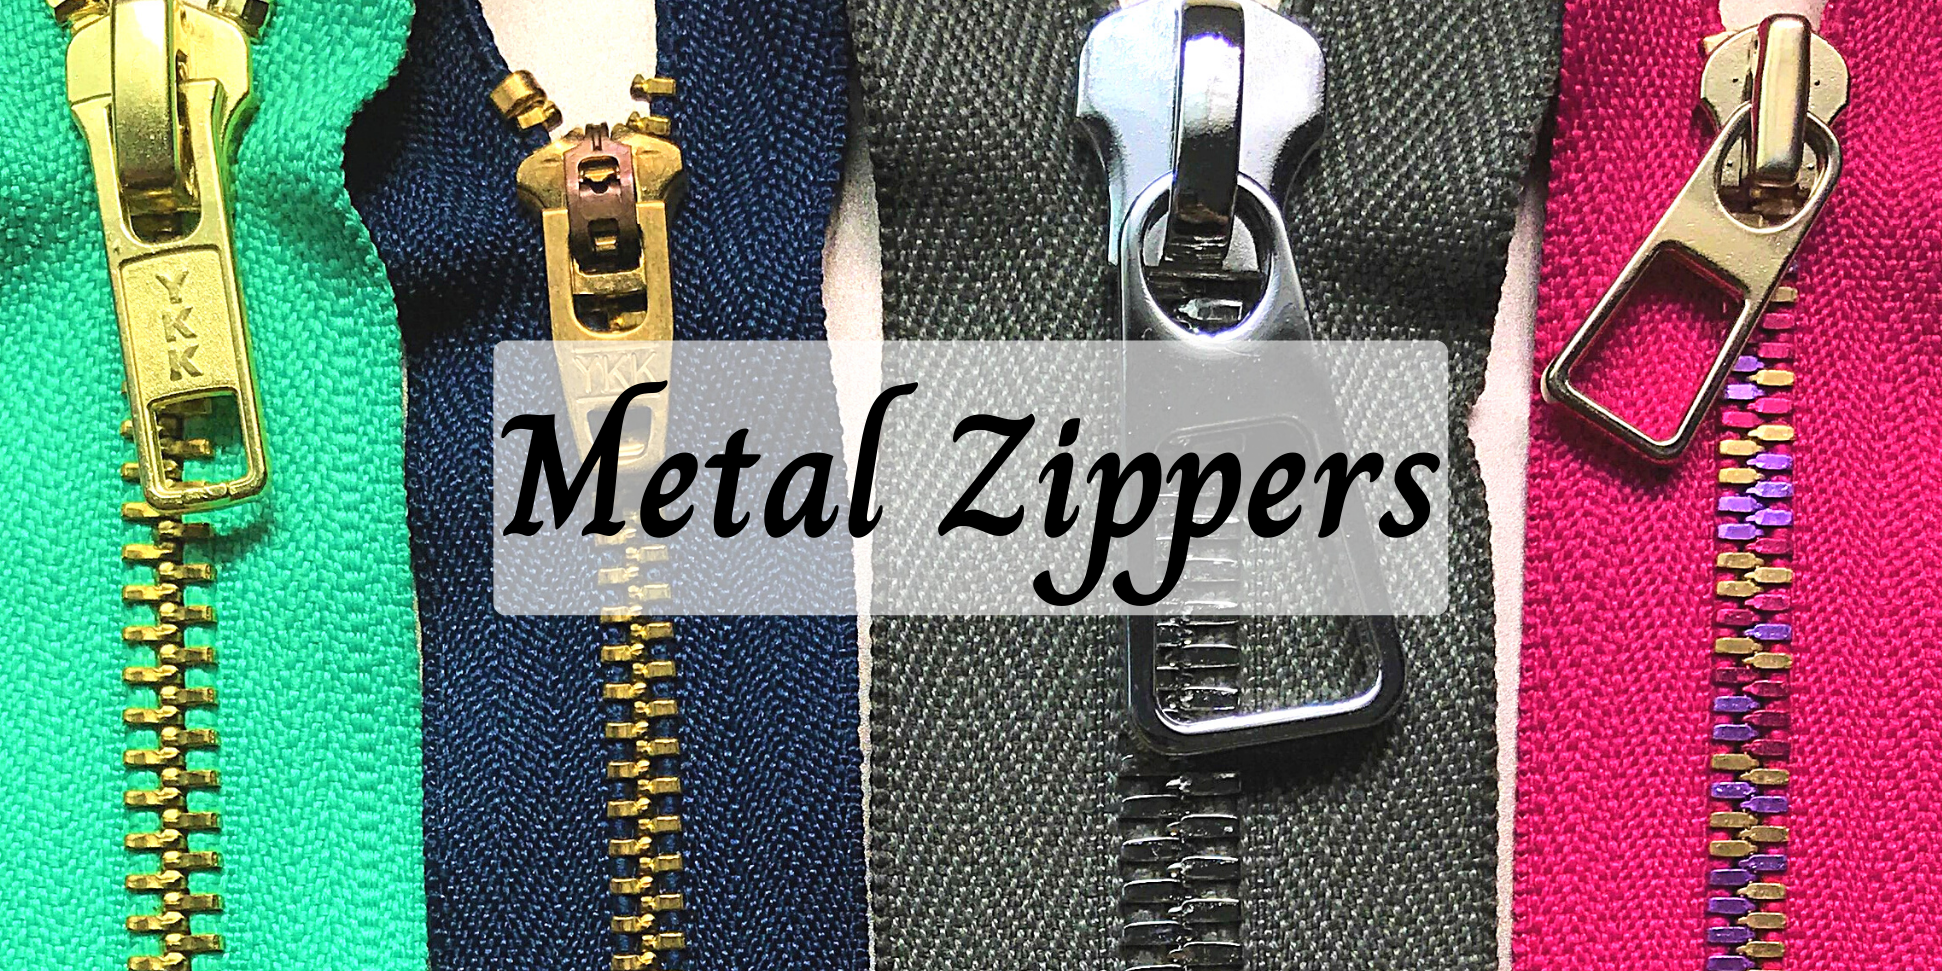 Luggage Zippers - Single Coil Zipper vs Double Coil Zipper 